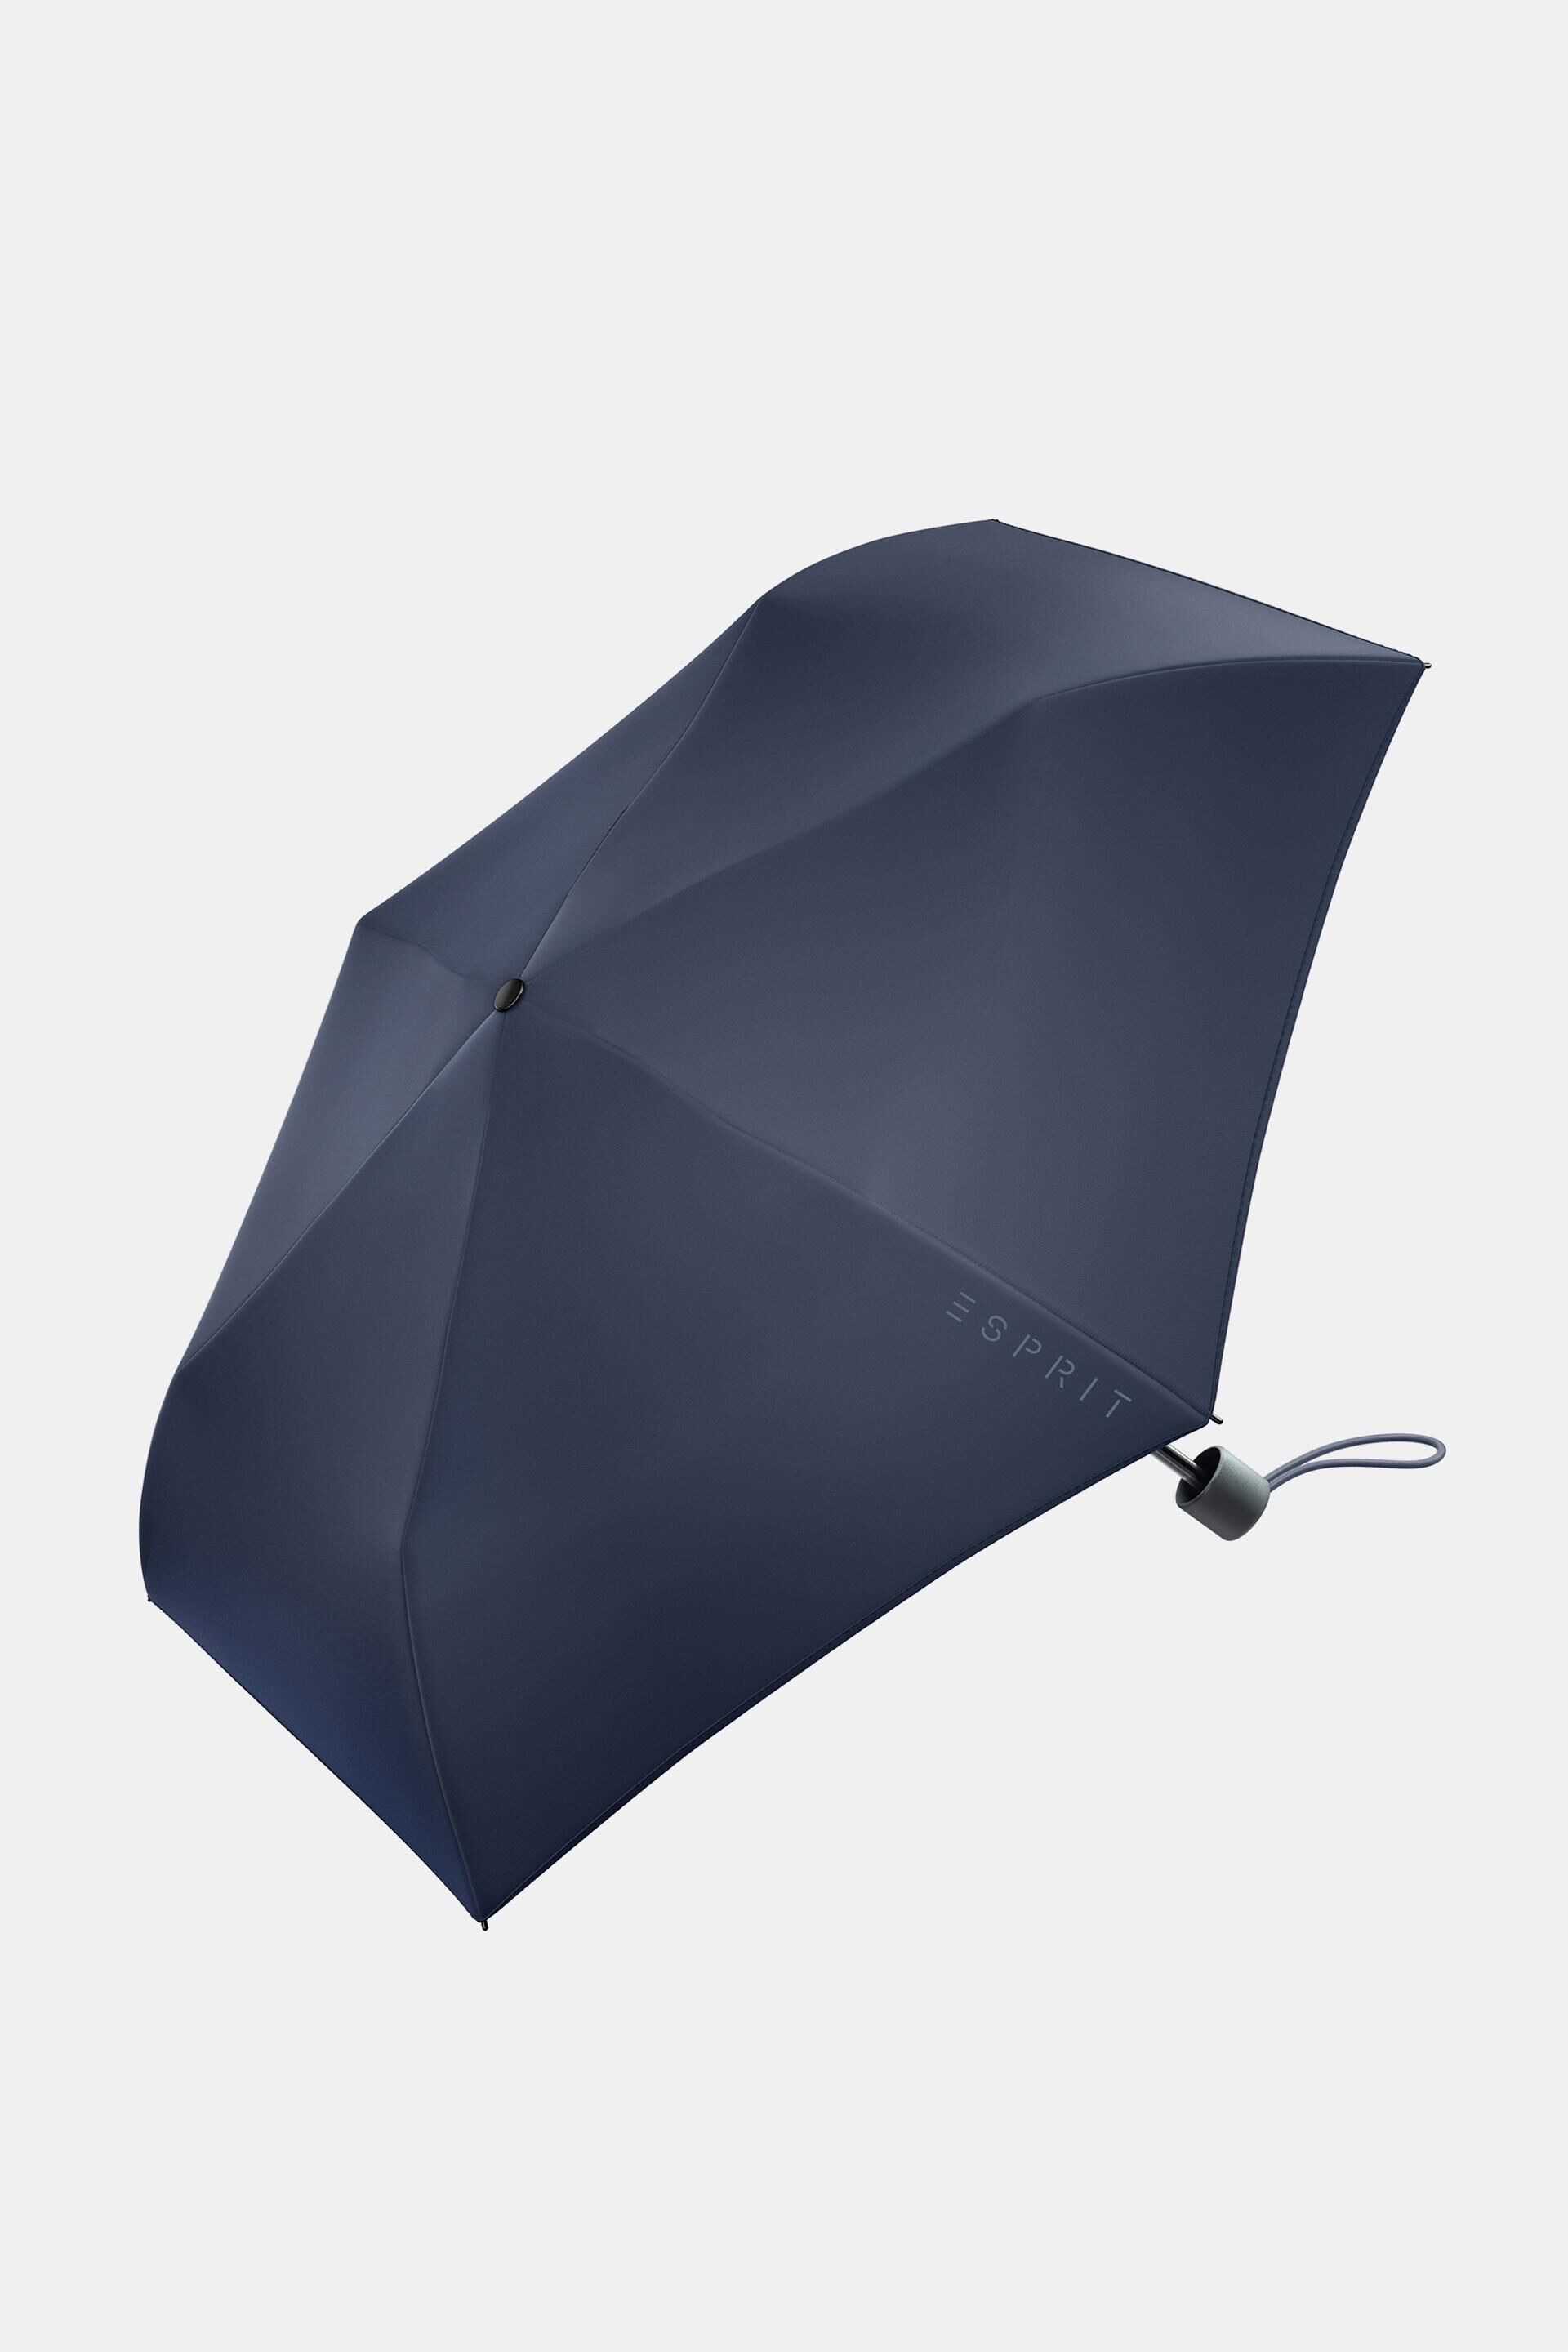 Esprit logo Pocket blue print navy with in umbrella